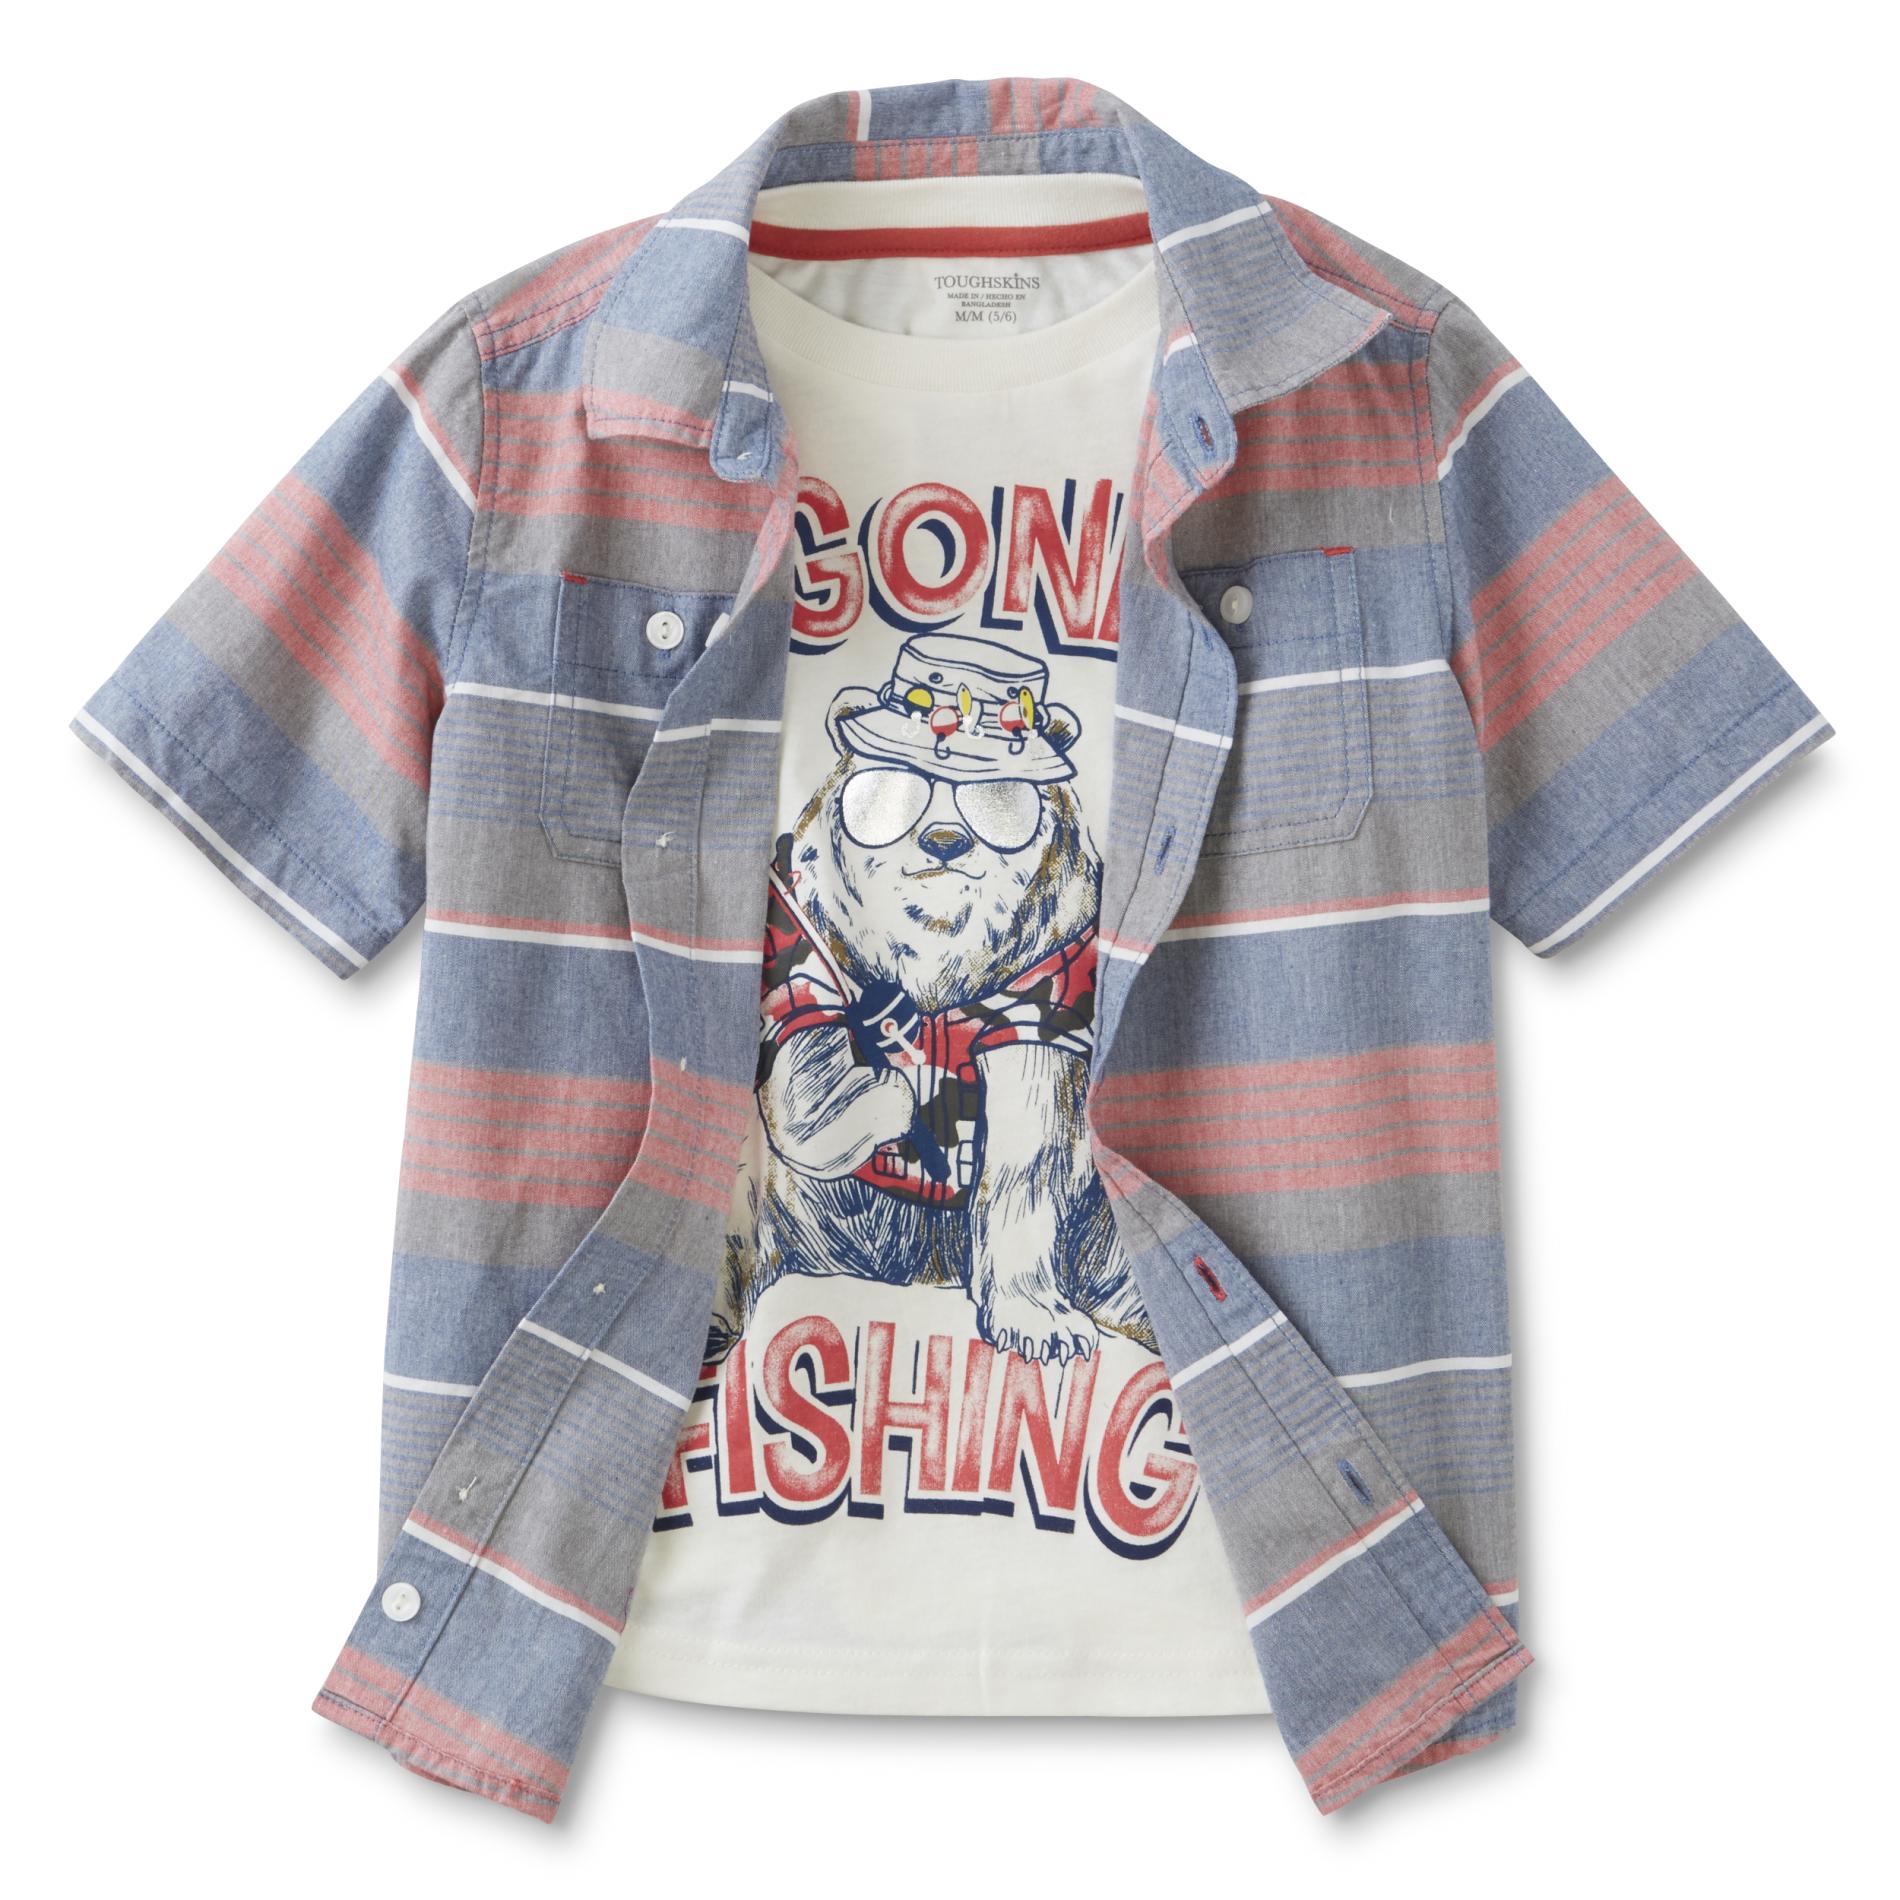 Toughskins Infant & Toddler Boy's Button-Front Shirt & T-Shirt - Striped & Fishing